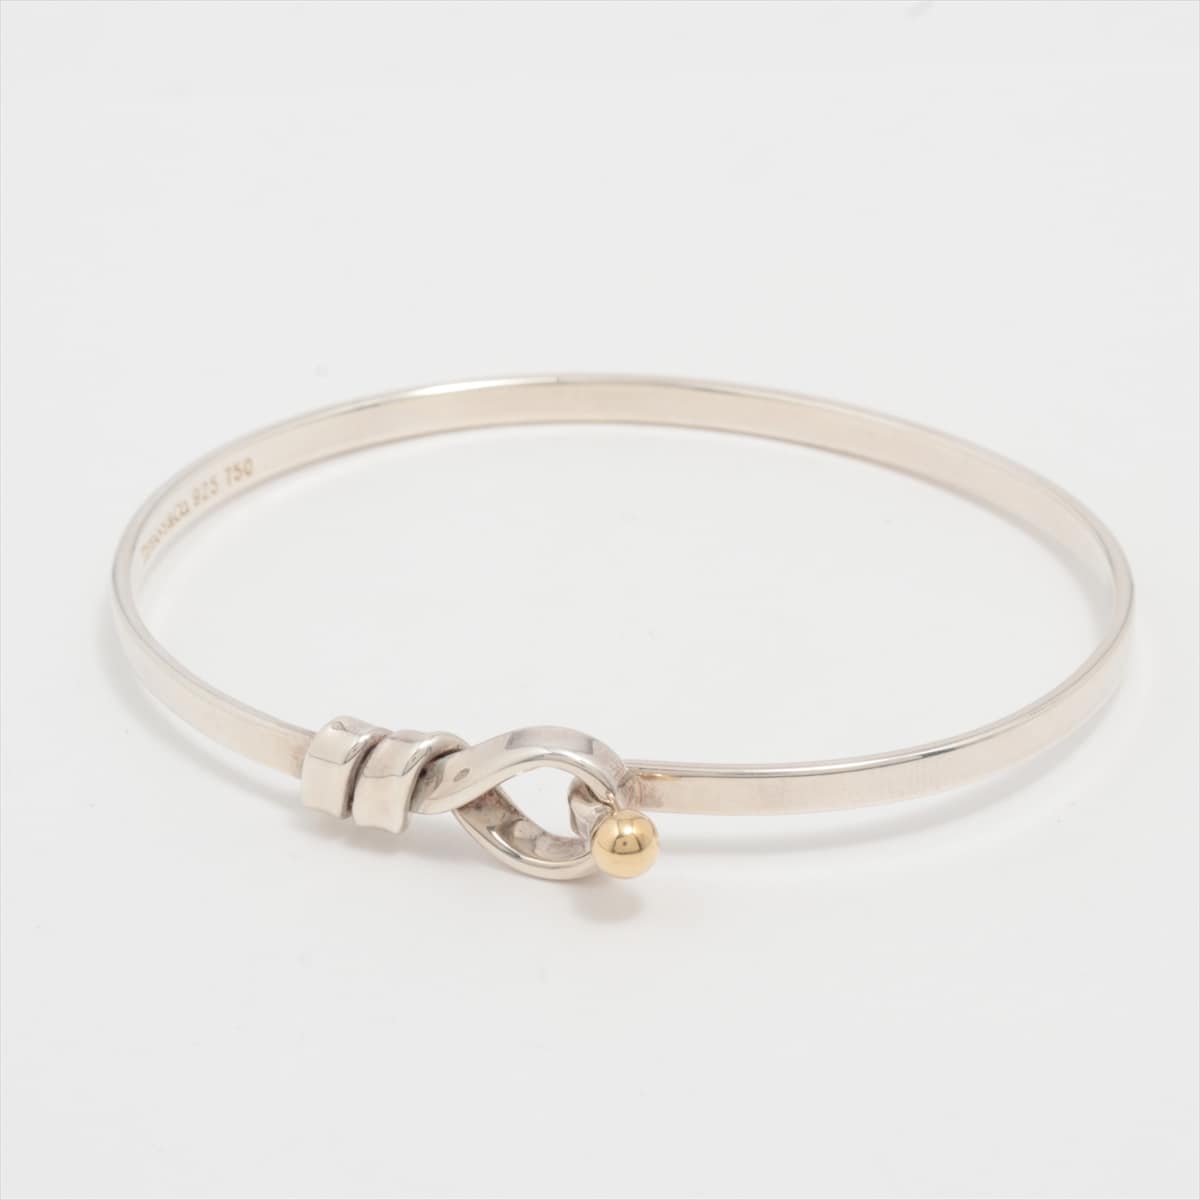 Tiffany combination hook & eye Bangle 925 9.5g Gold × Silver